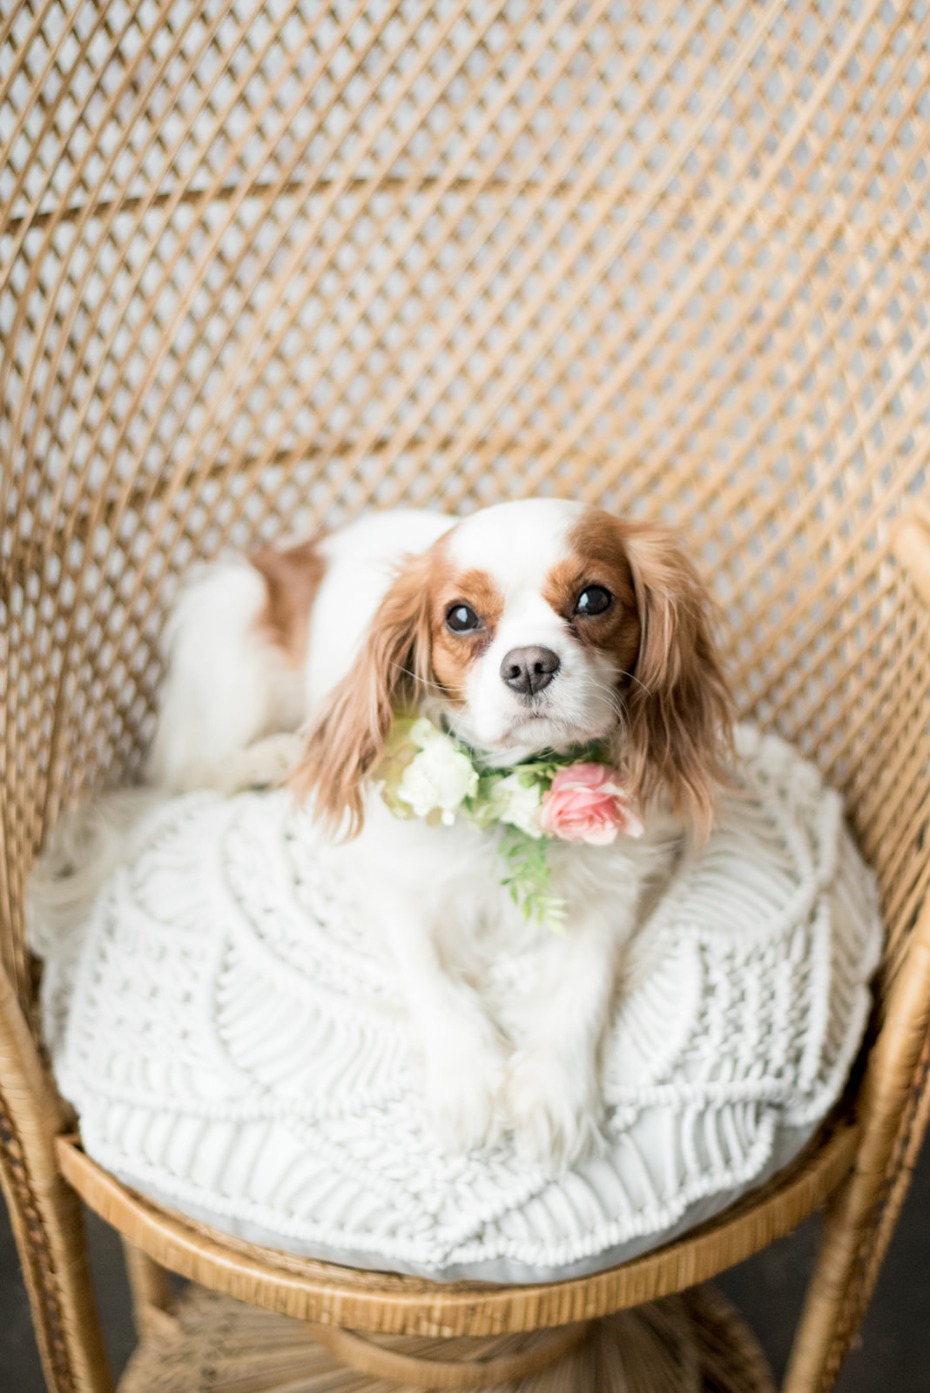 Cute wedding pup!